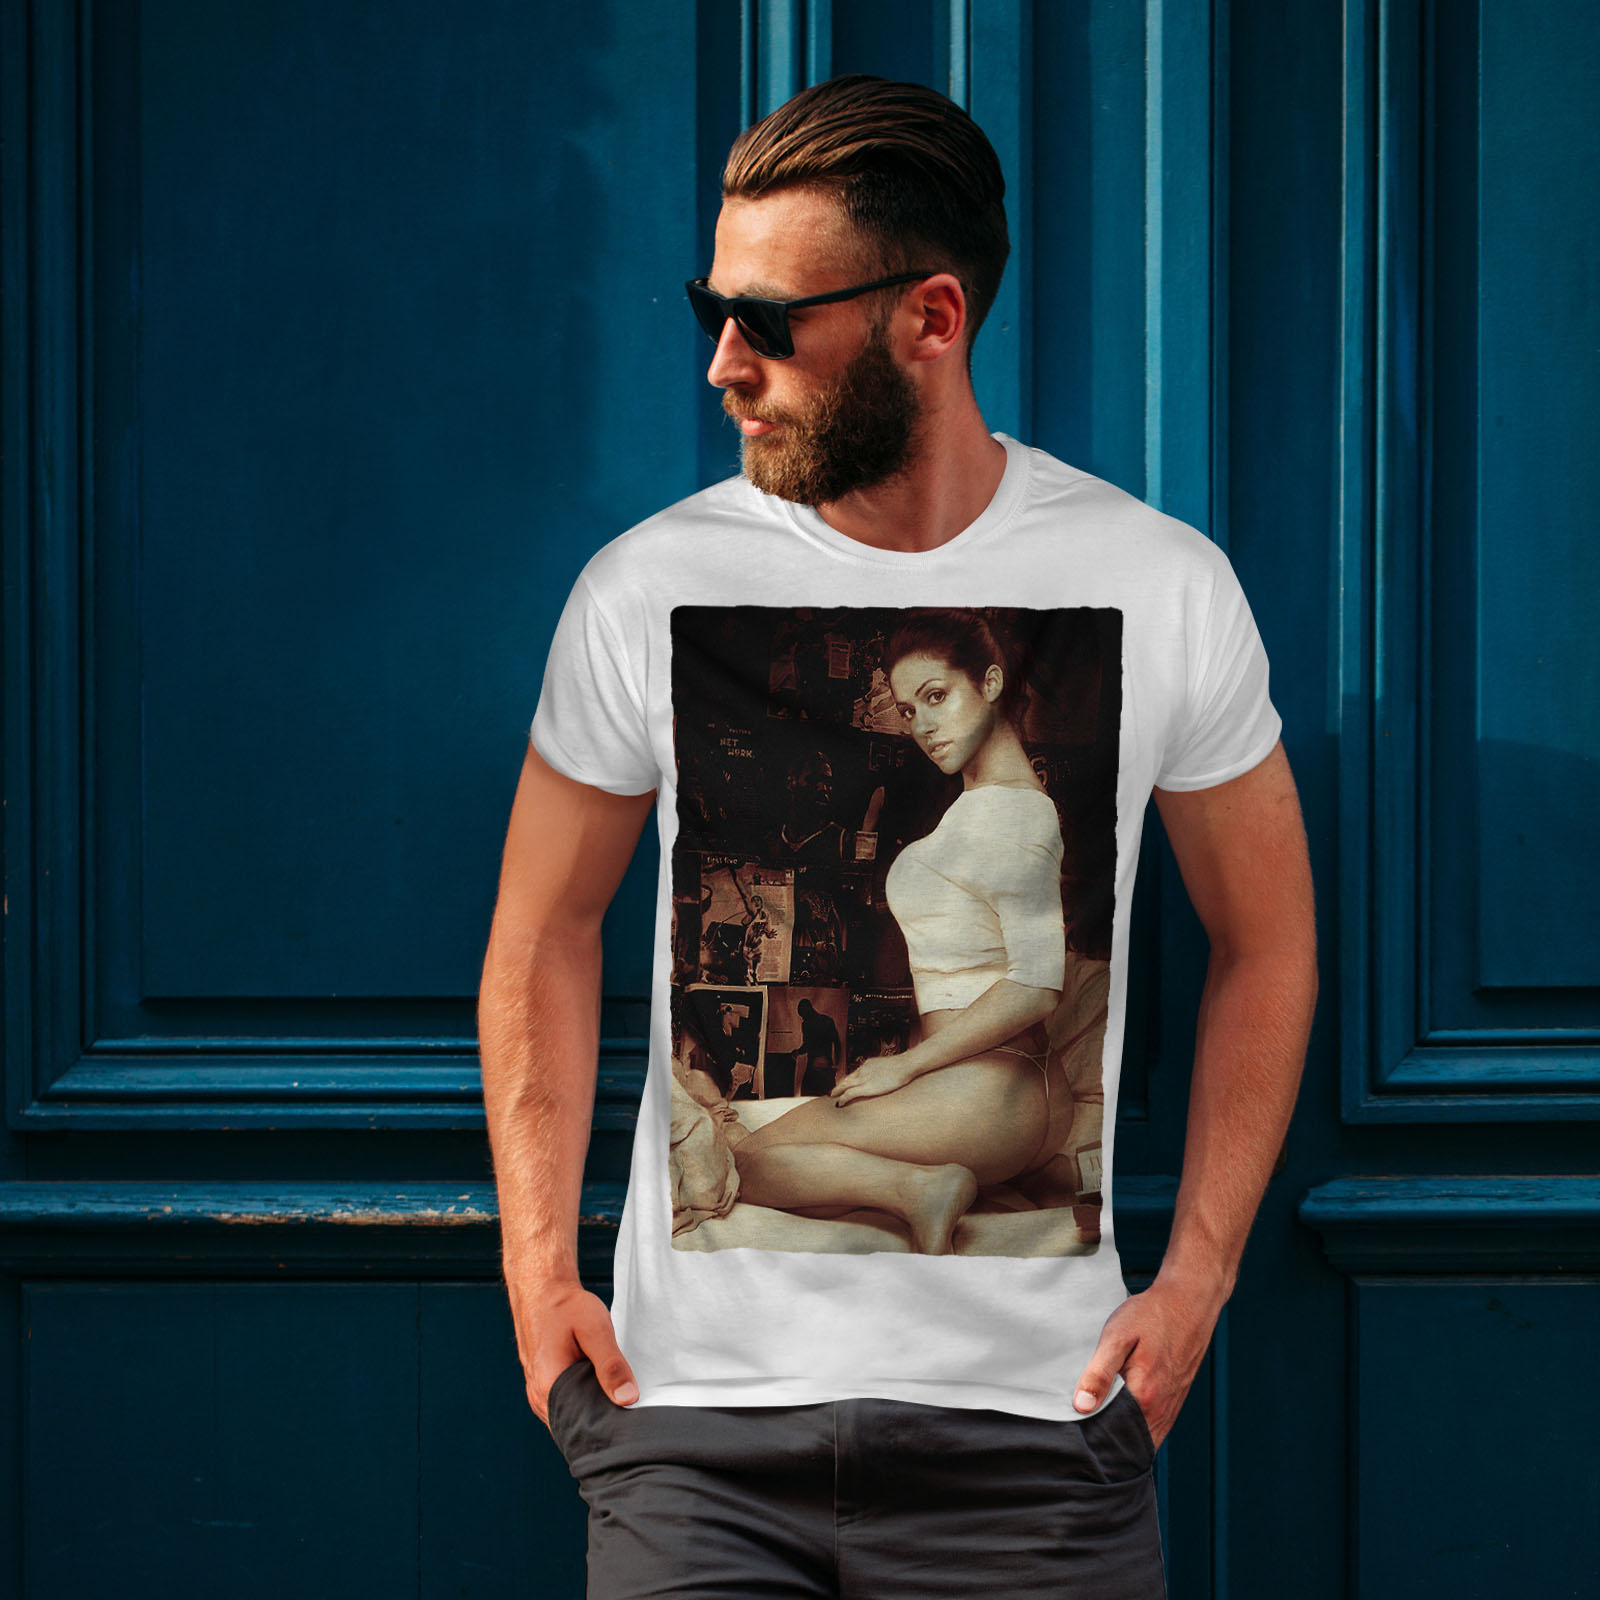 Wellcoda Hot Girl Nude Erotic Mens T-shirt, American Graphic